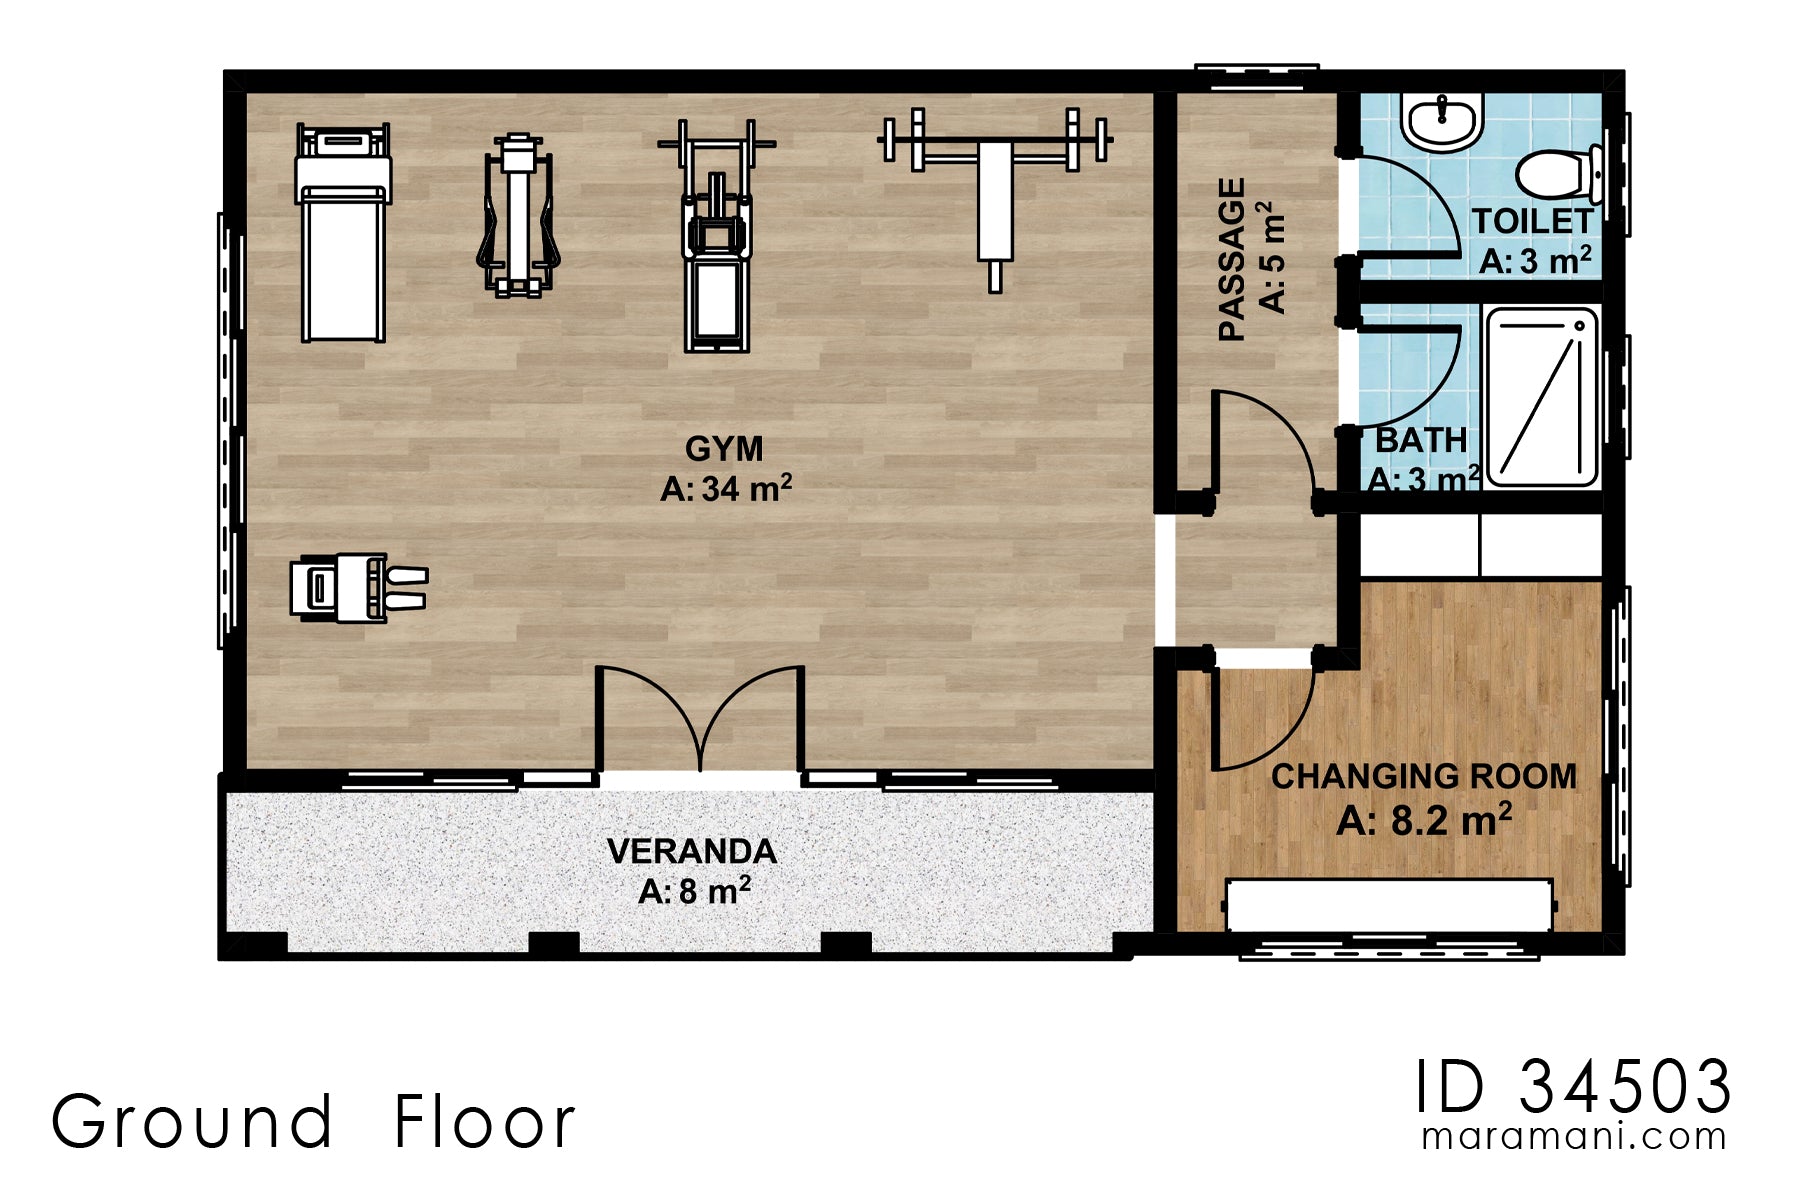 4 Bedroom modern house design - ID 34503